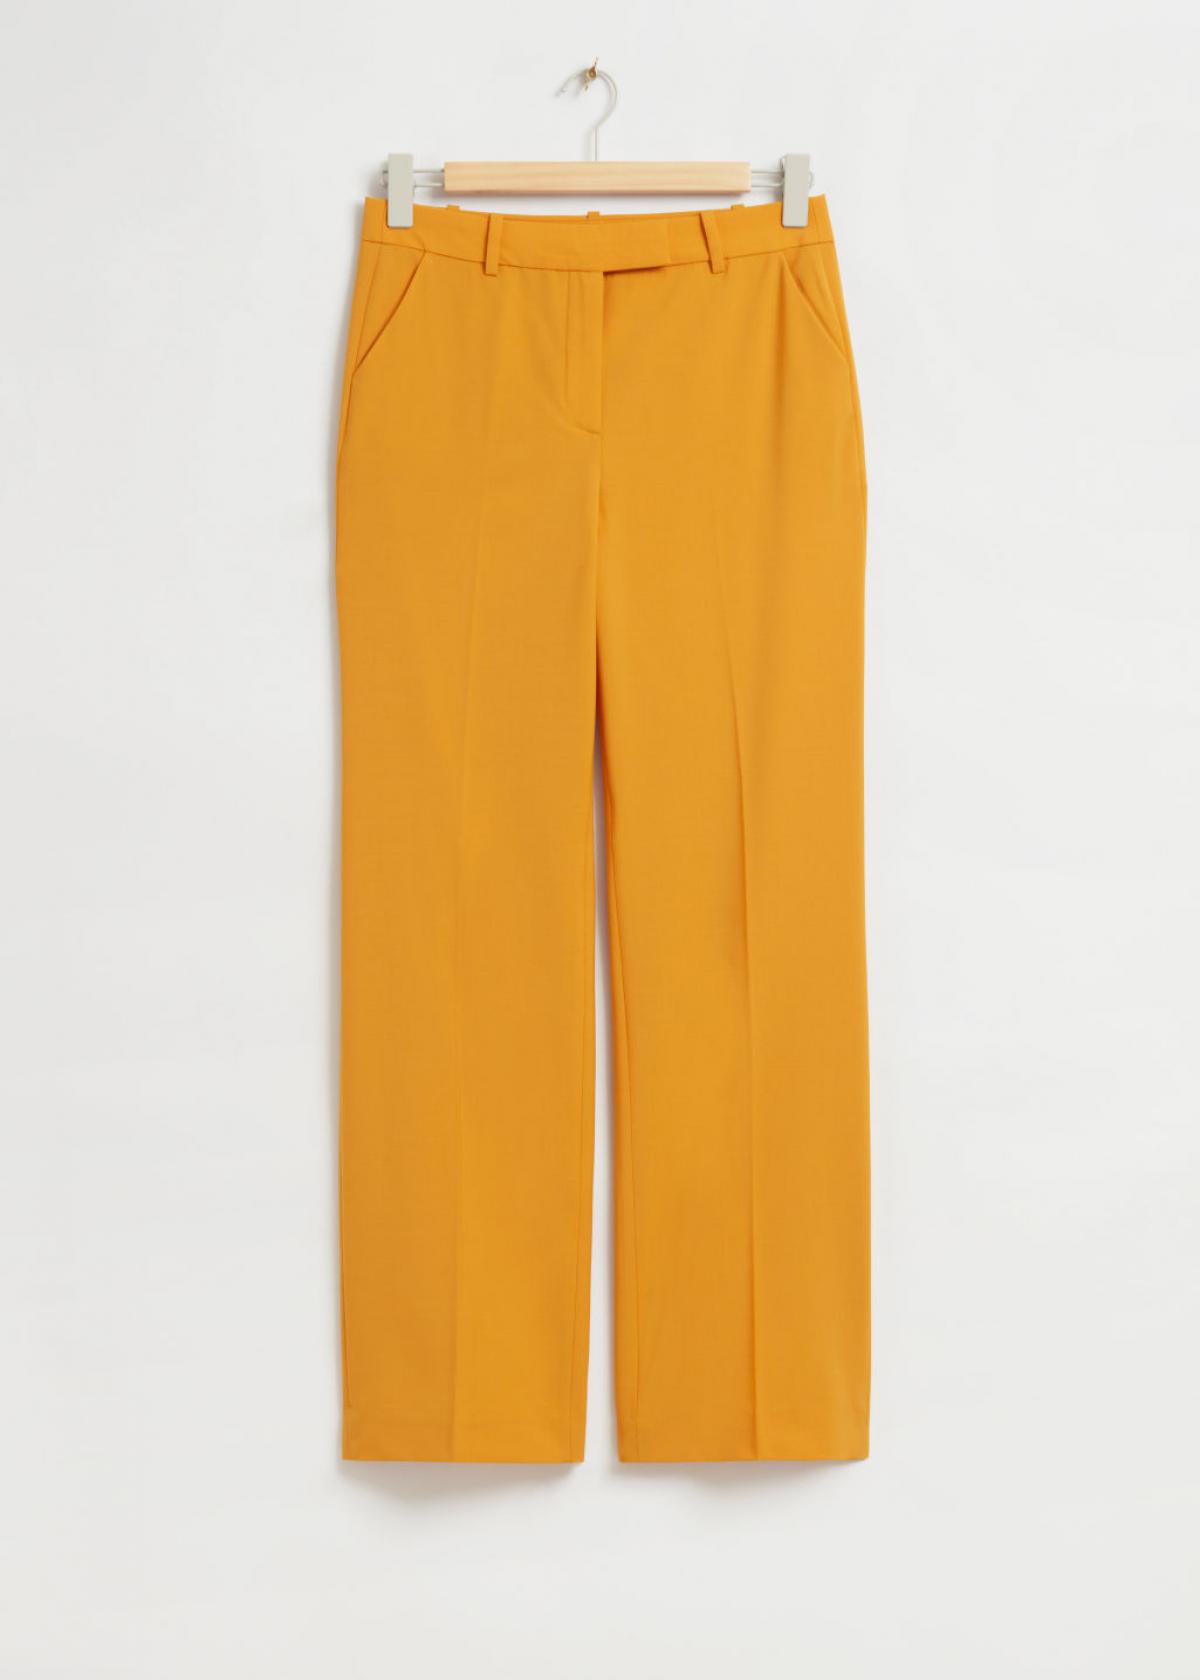 Le pantalon orange taille basse